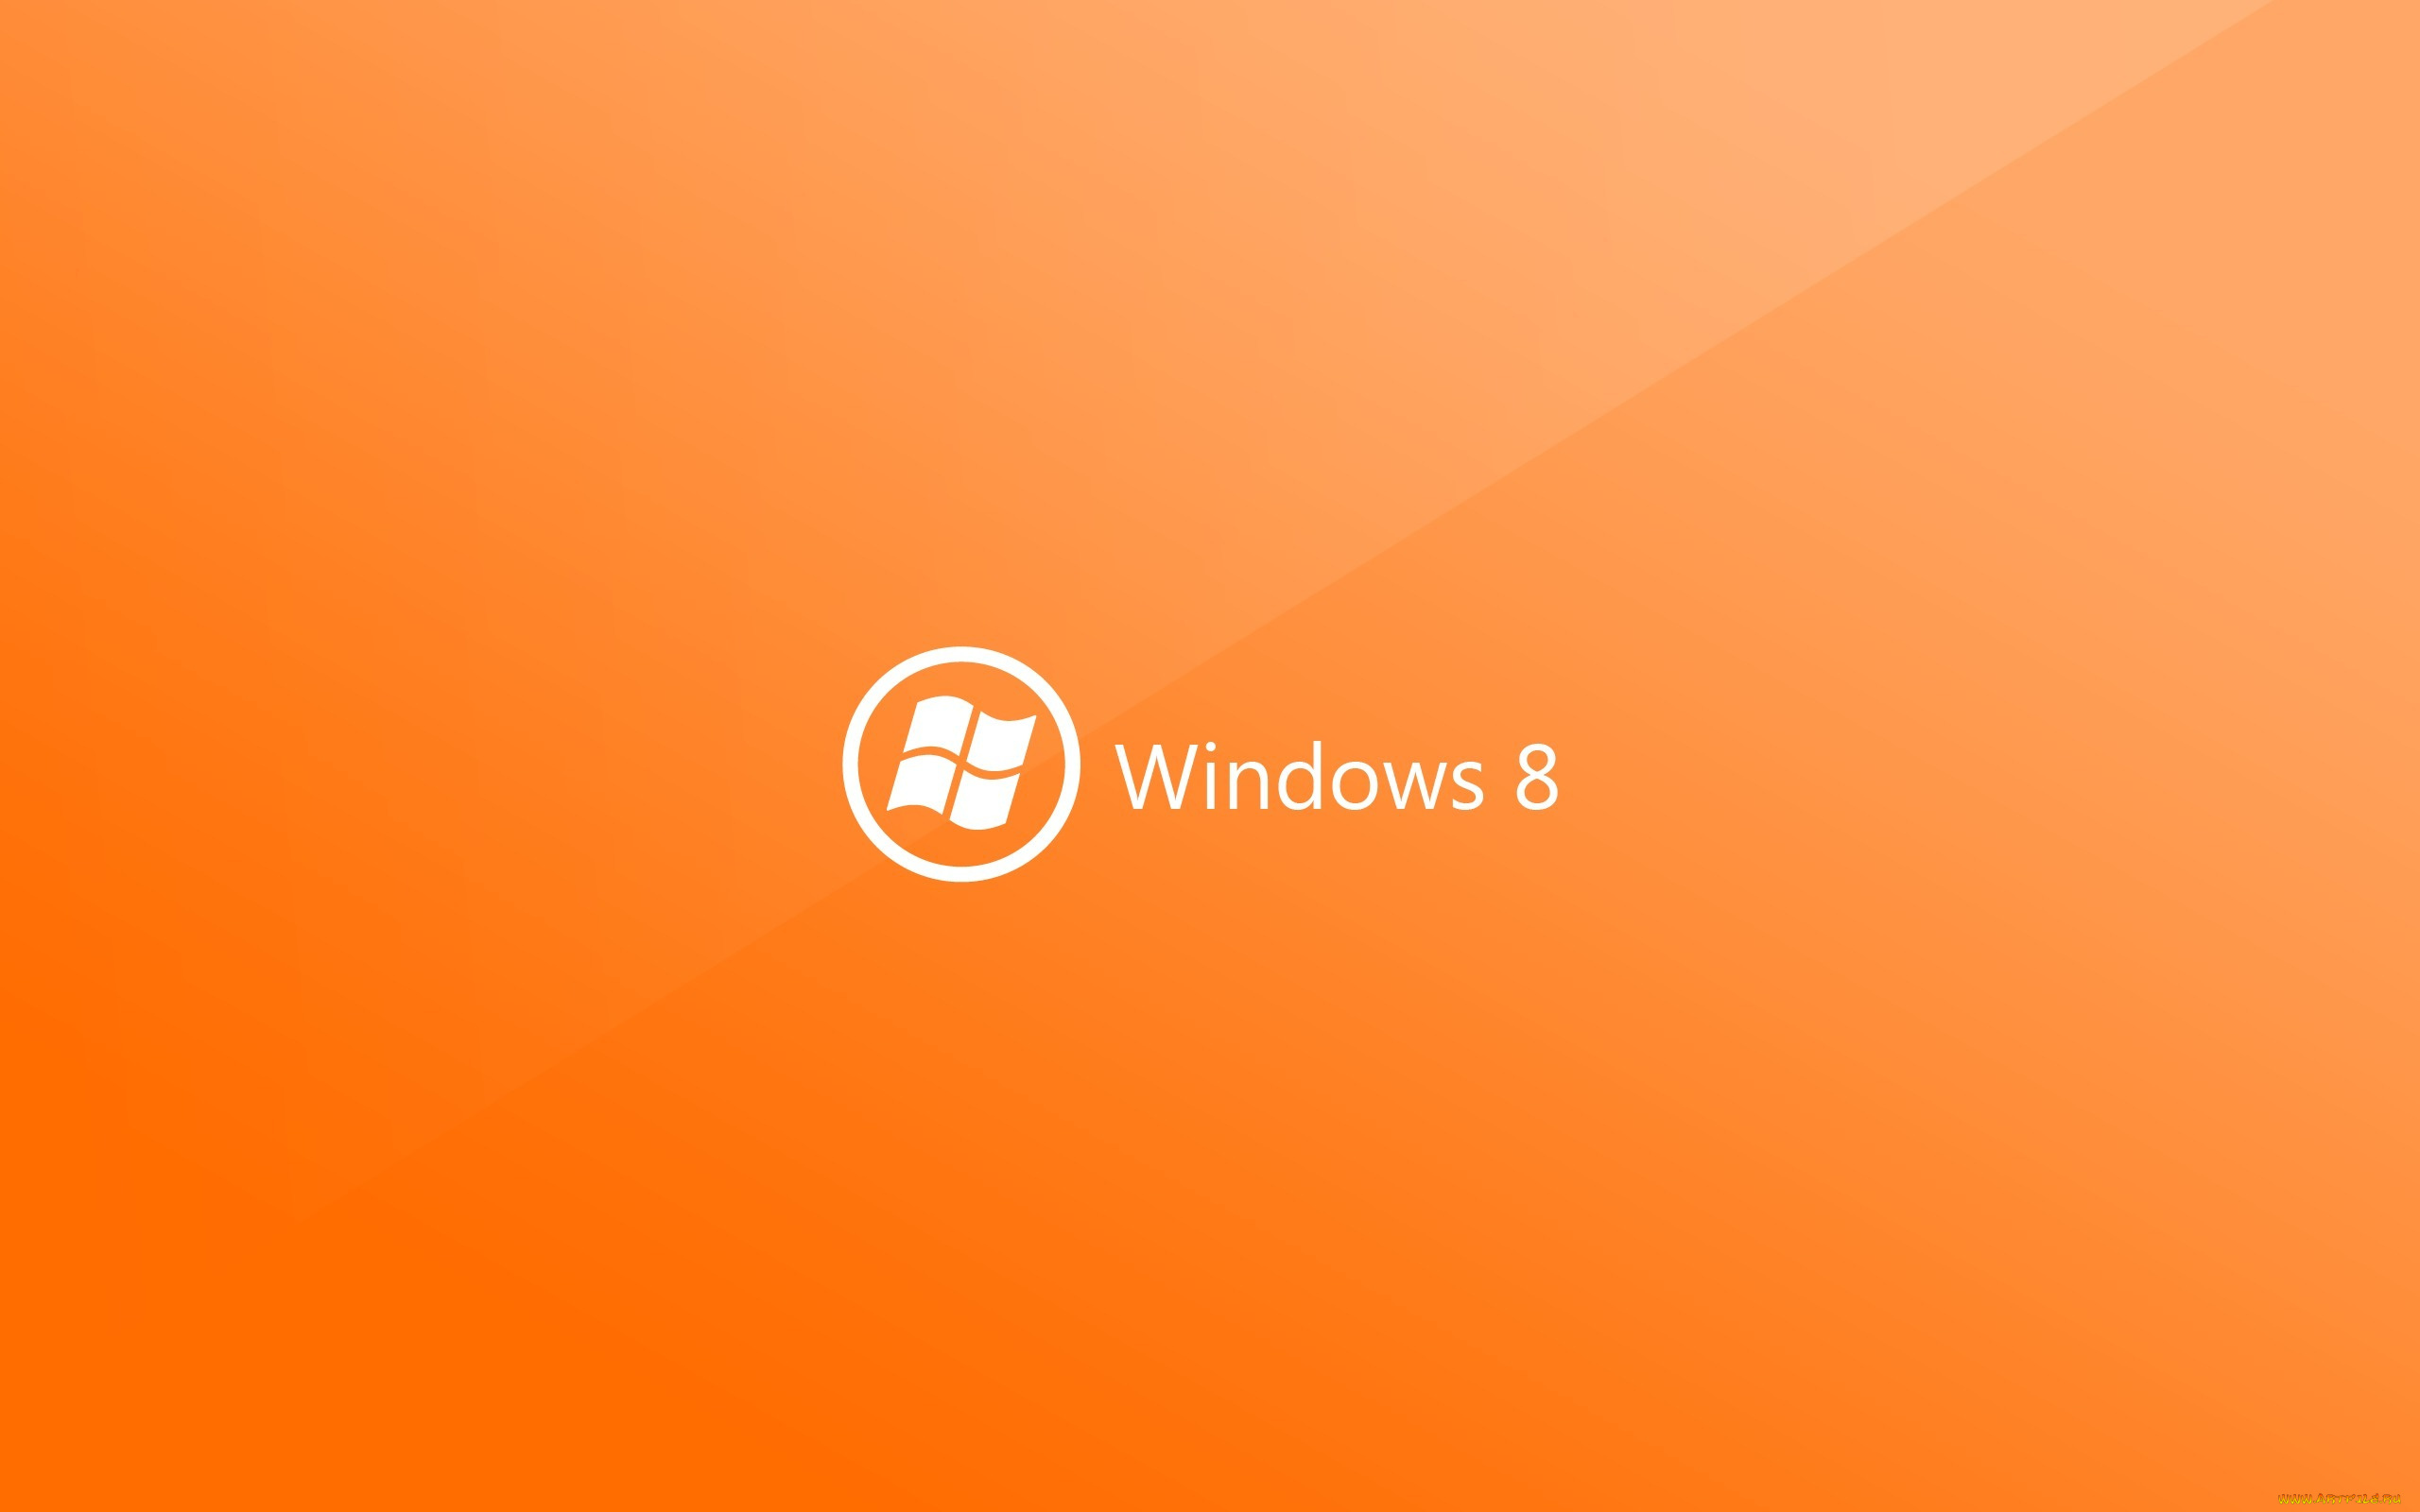 компьютеры, windows, orange, logo, microsoft, pc, 8